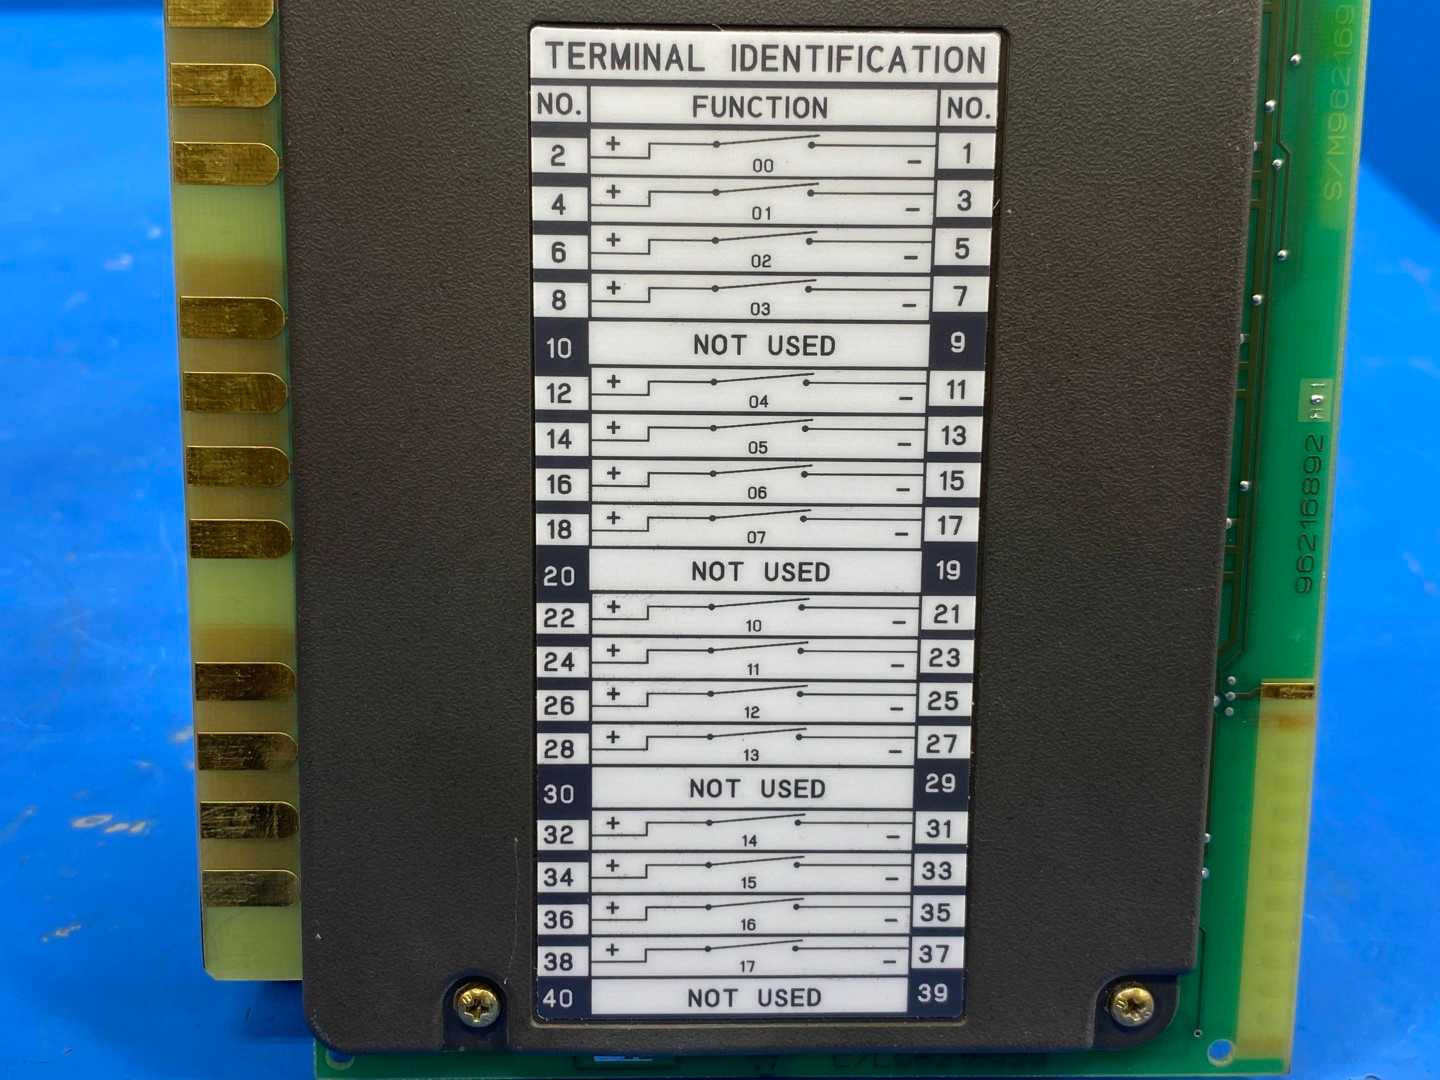 Allen-Bradley 1771-0Q16/B Isolated DC Output Module 10-32VDC